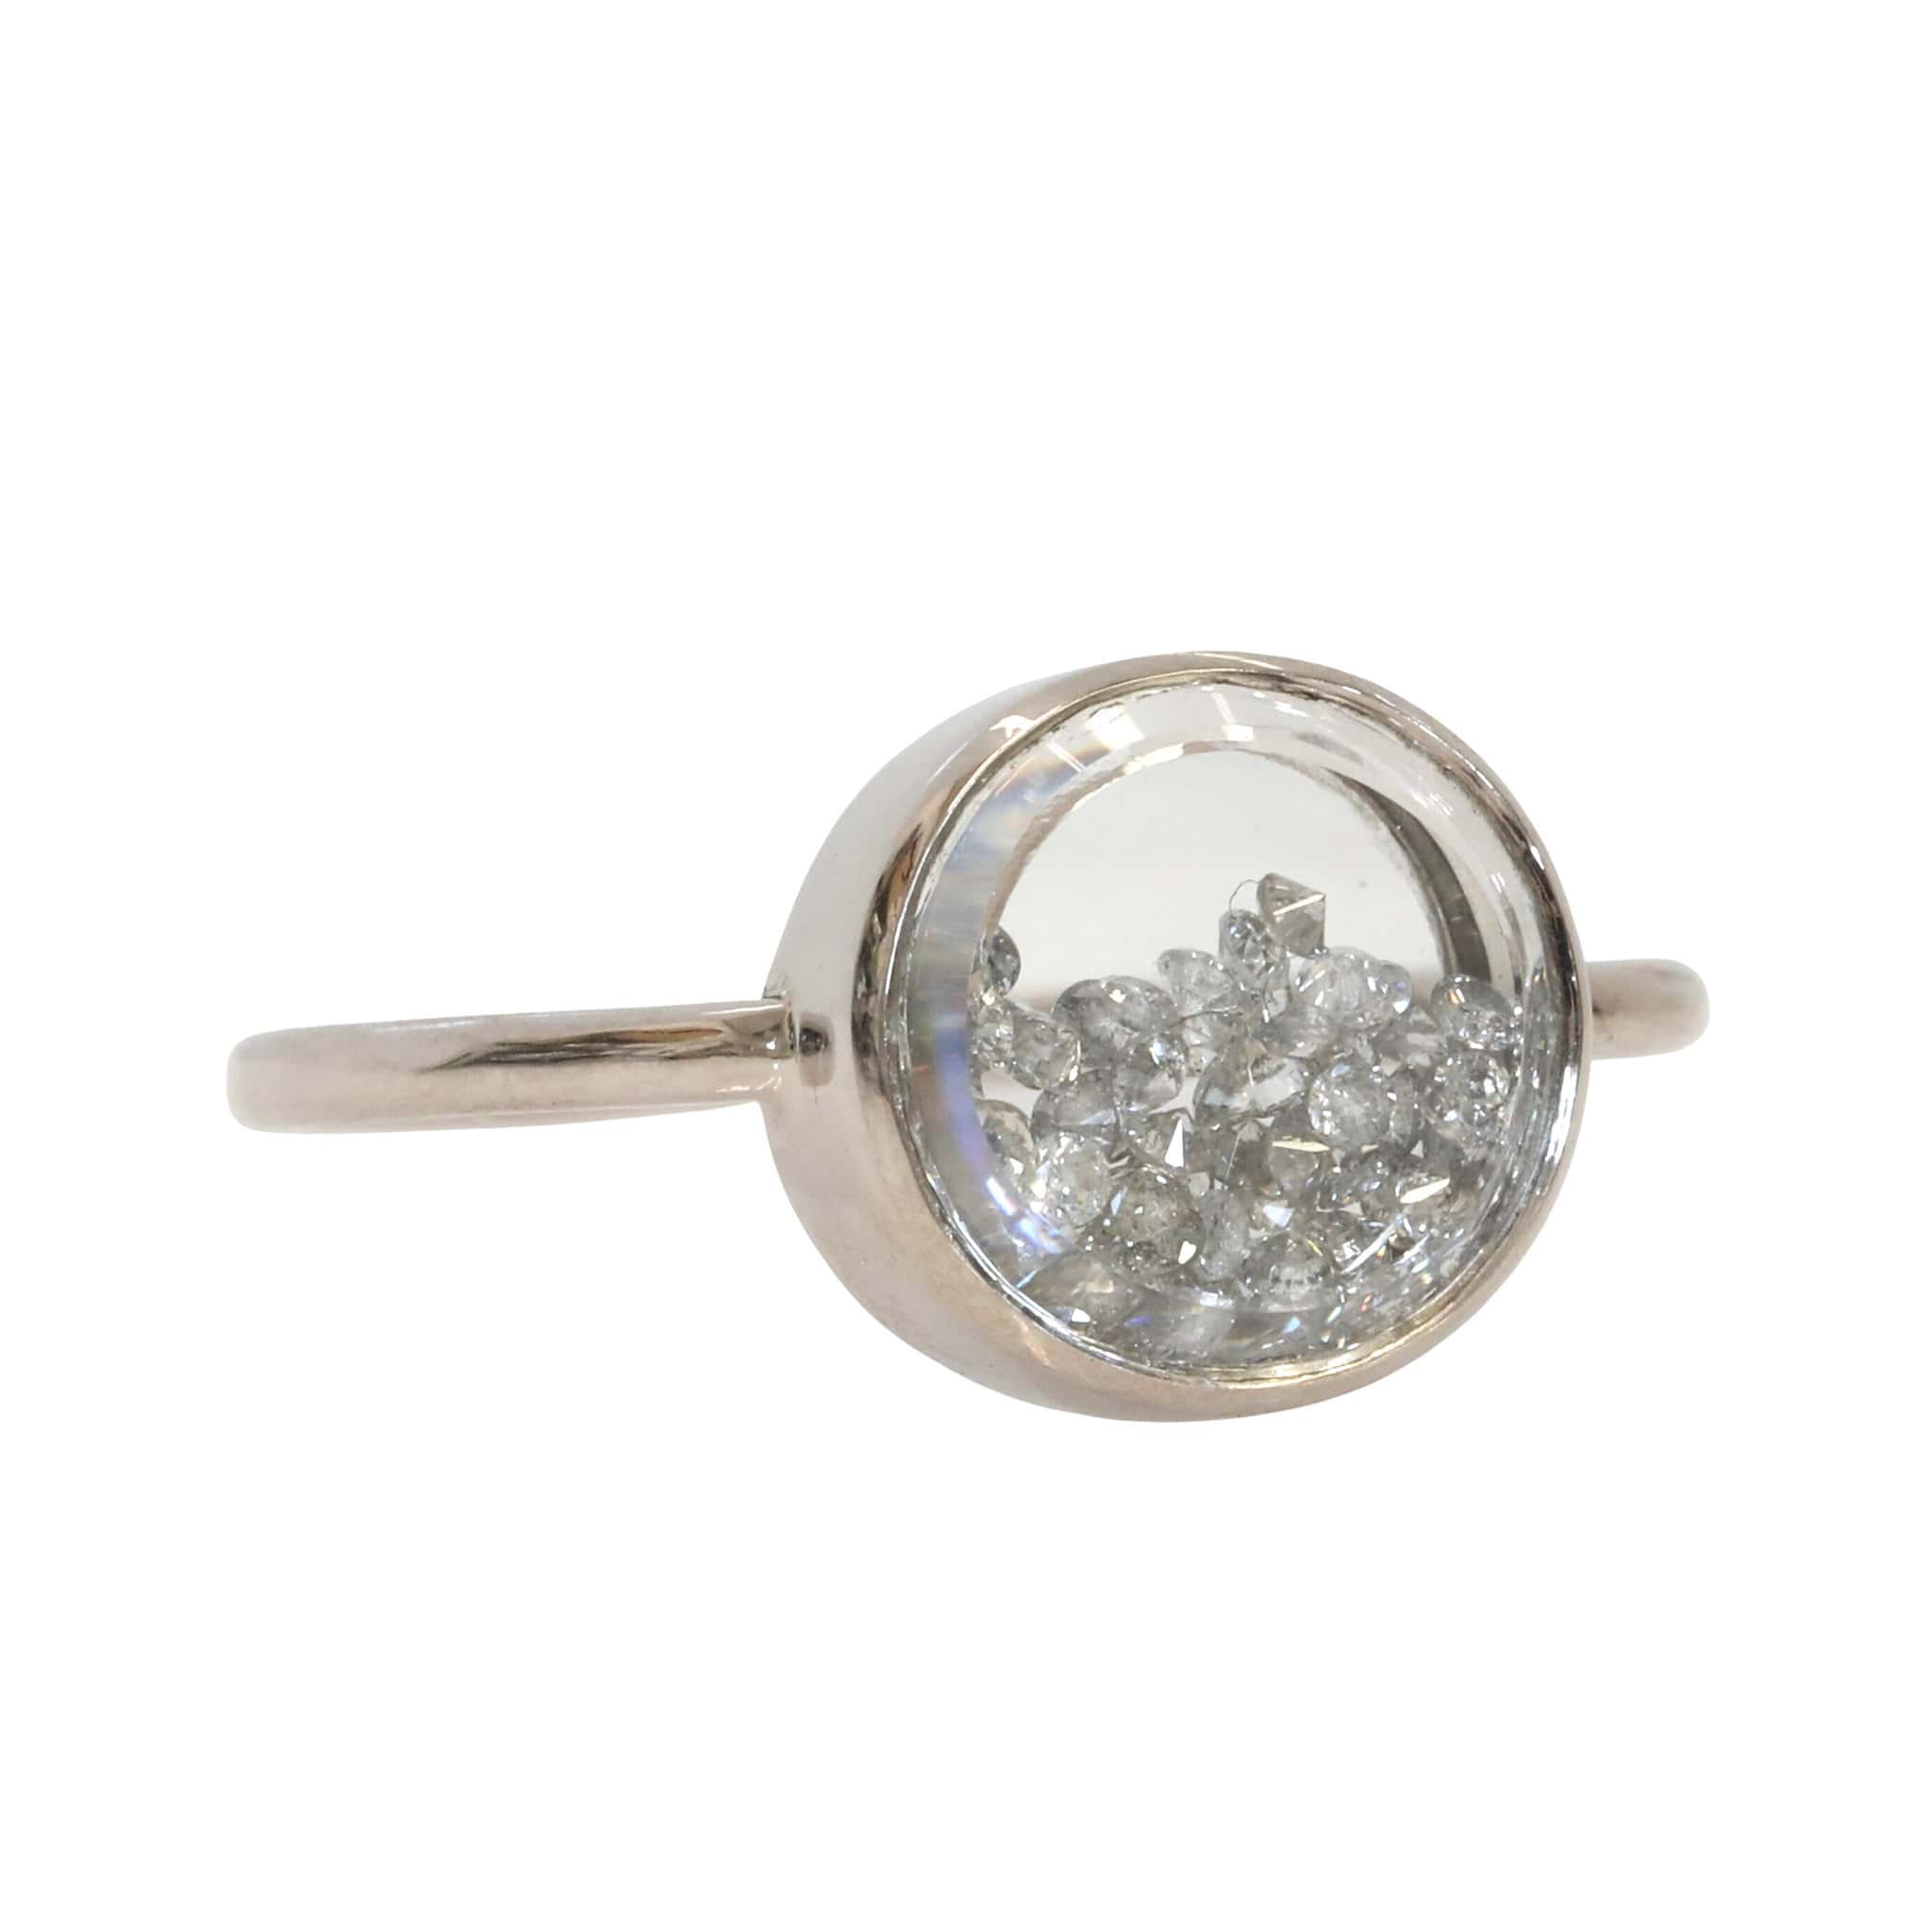 Moritz Glik 18K White Gold Palladium Ring with Grey and White Diamond Round Shaker